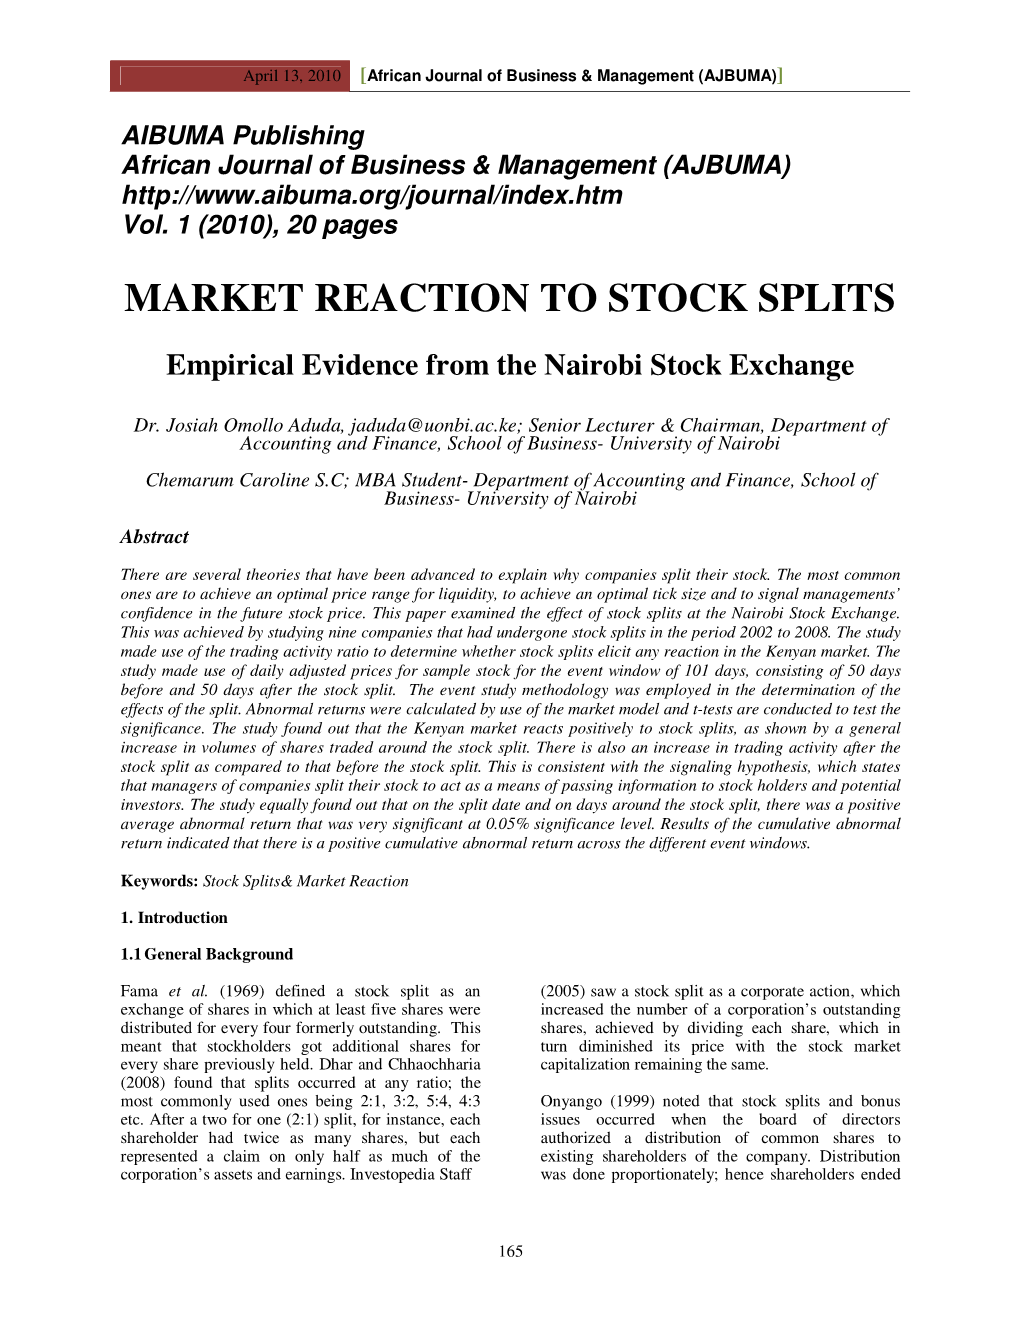 Market Reaction to Stock Splits